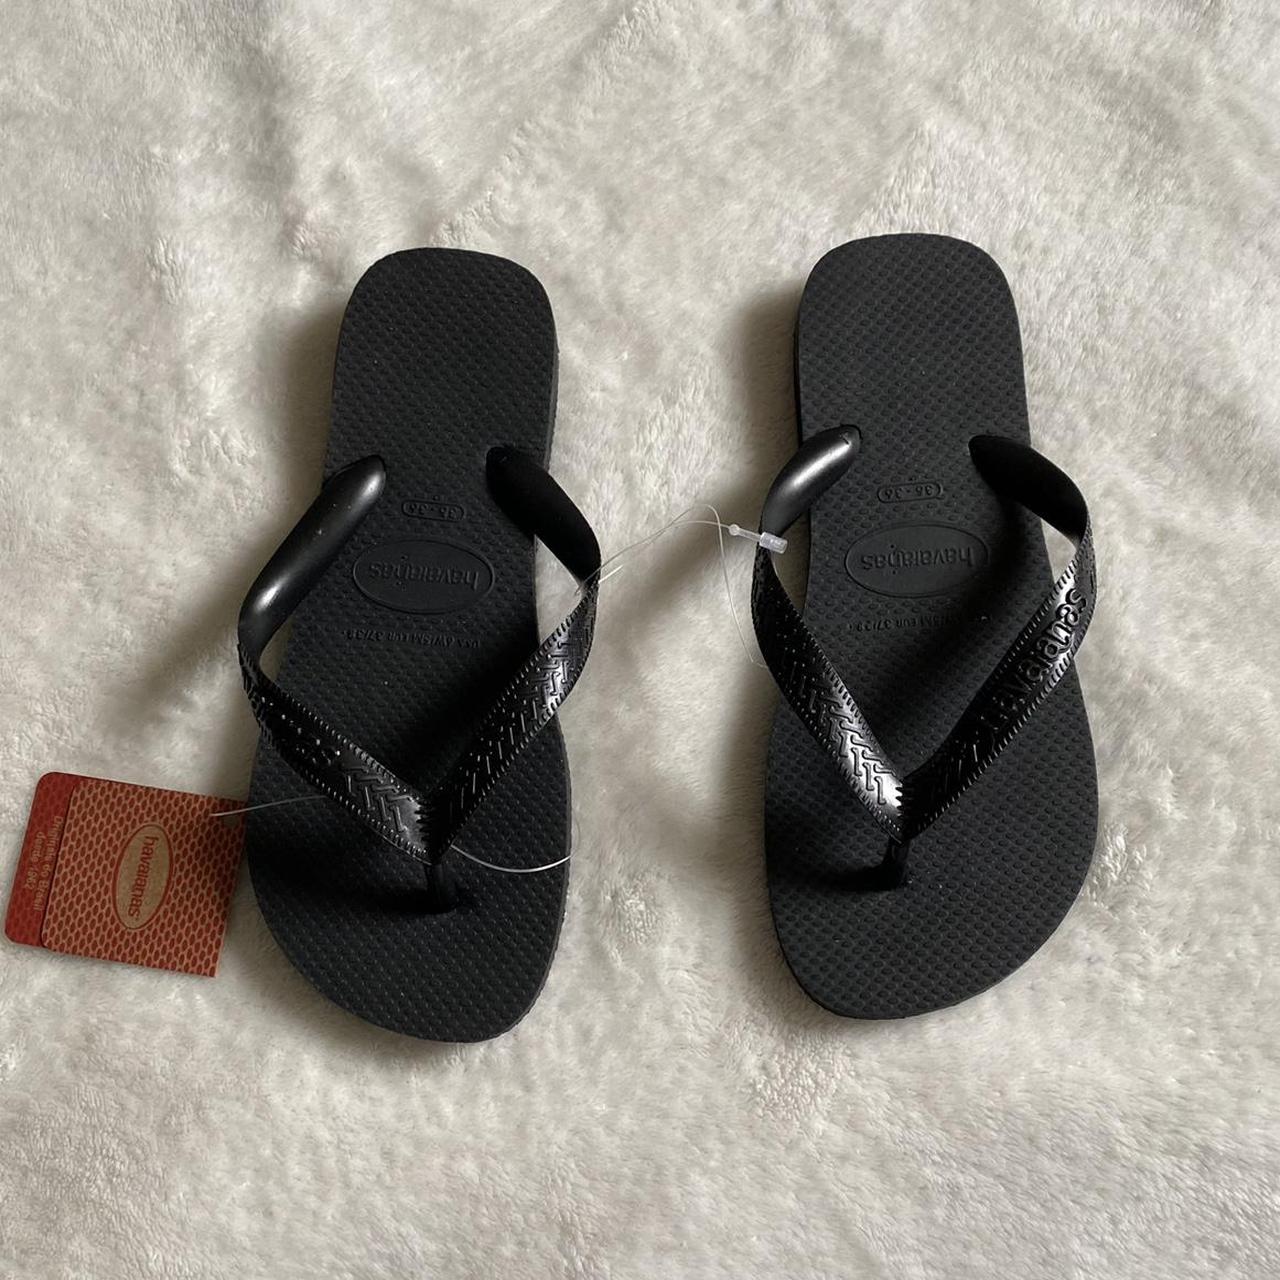 Product Image 2 - Havaianas Top Sandal Flip Flops